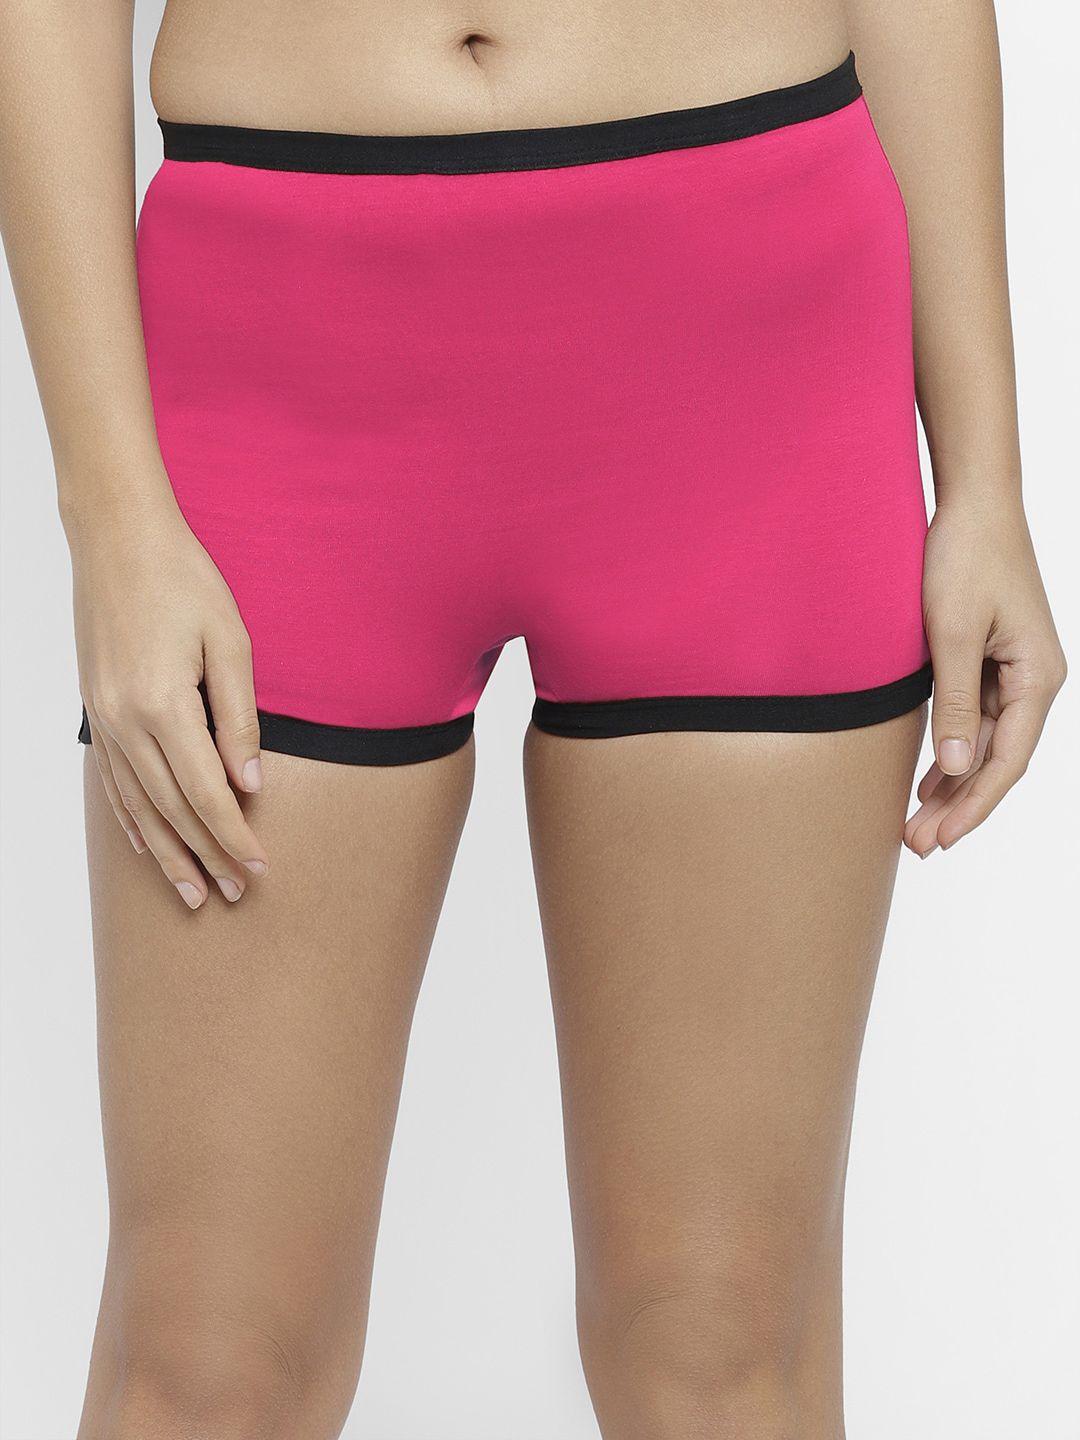 n-gal women magenta pink solid seamless boy shorts npbs01